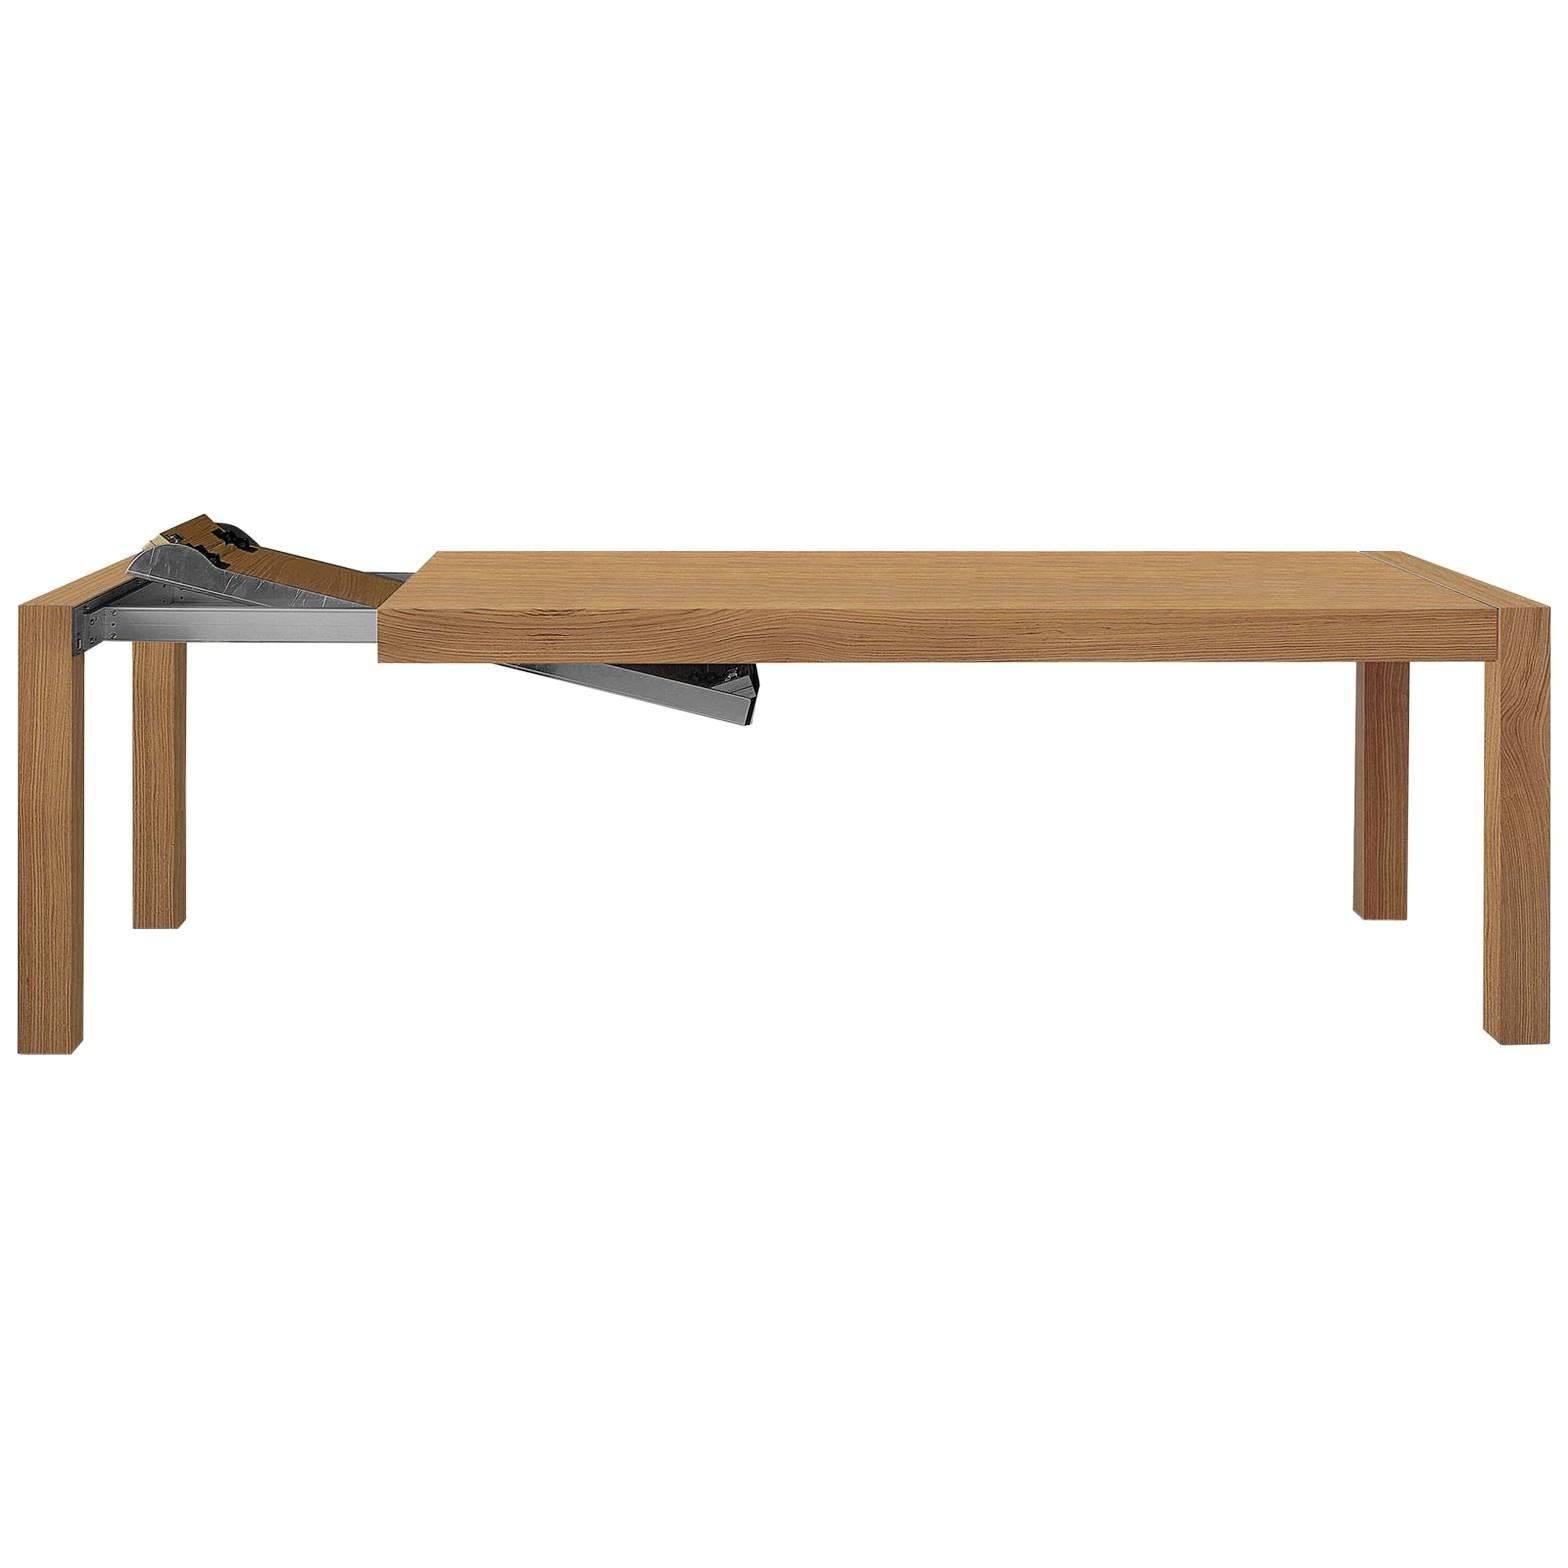 "Kwaak ++" Wooden Extendable Rectangular Table by Stephane Lebrun for Dessie'